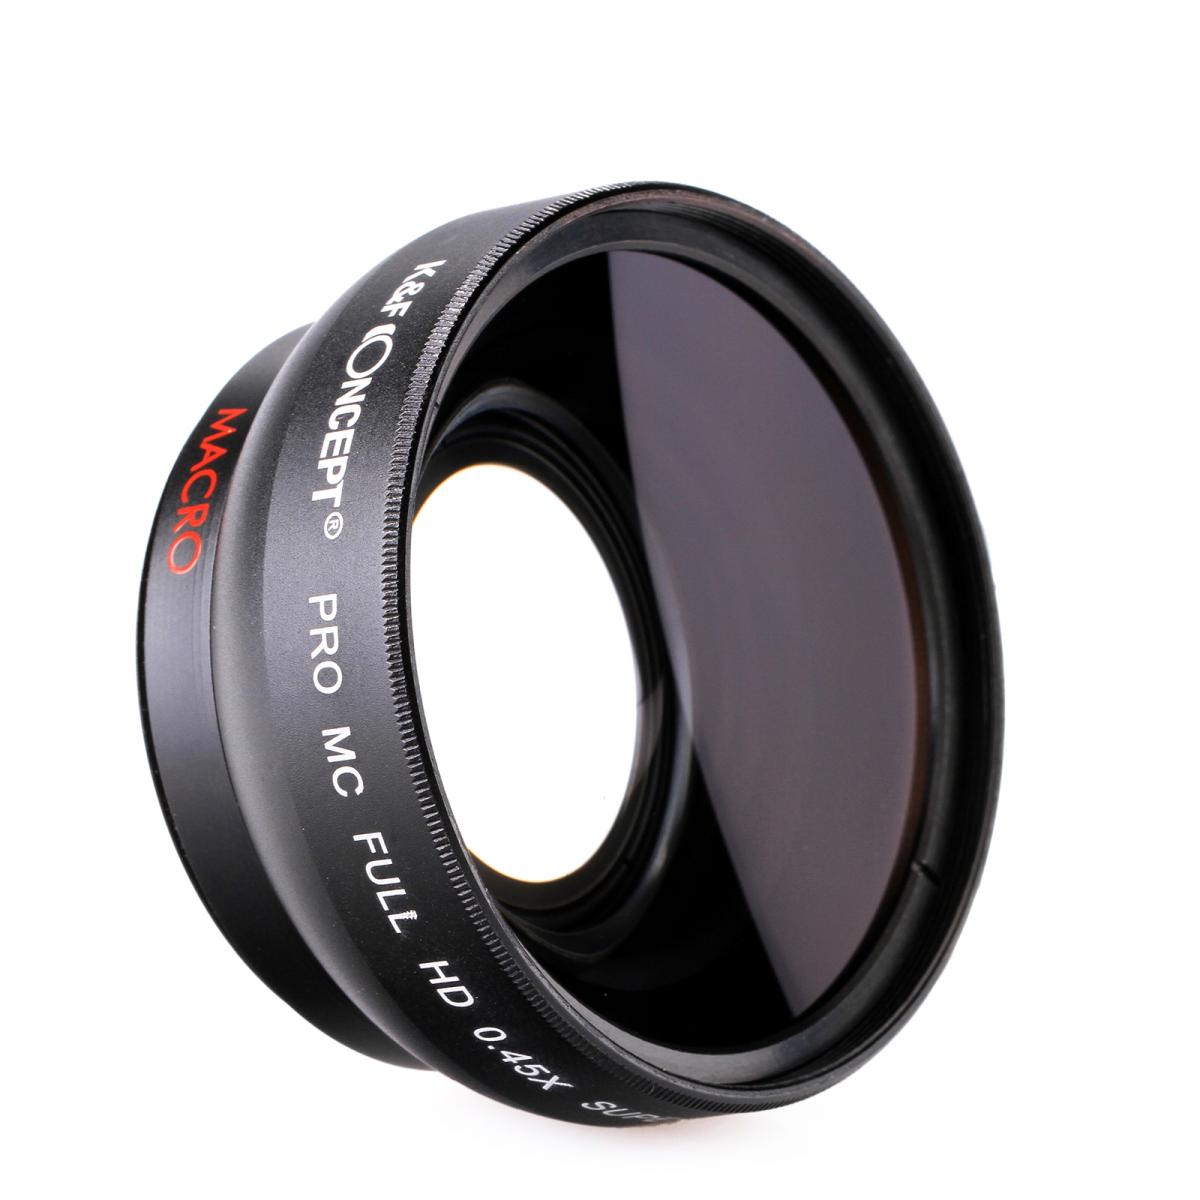 fisheye lens